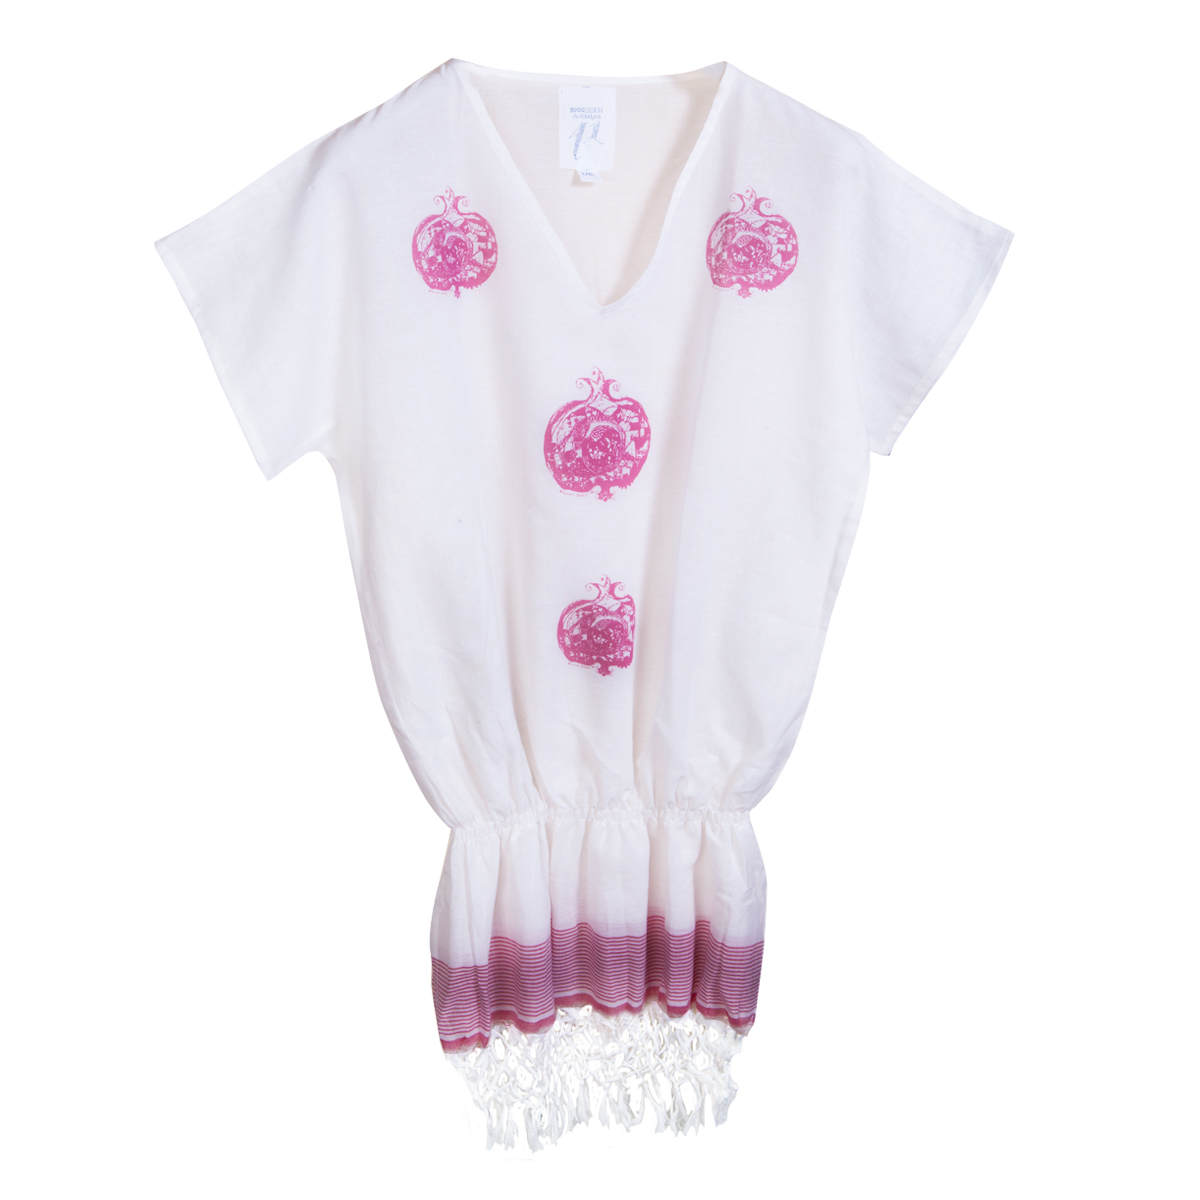 Biggdesign Pomegranate Beach Dress - Size S-M, 100% Cotton, Pomegranate pattern